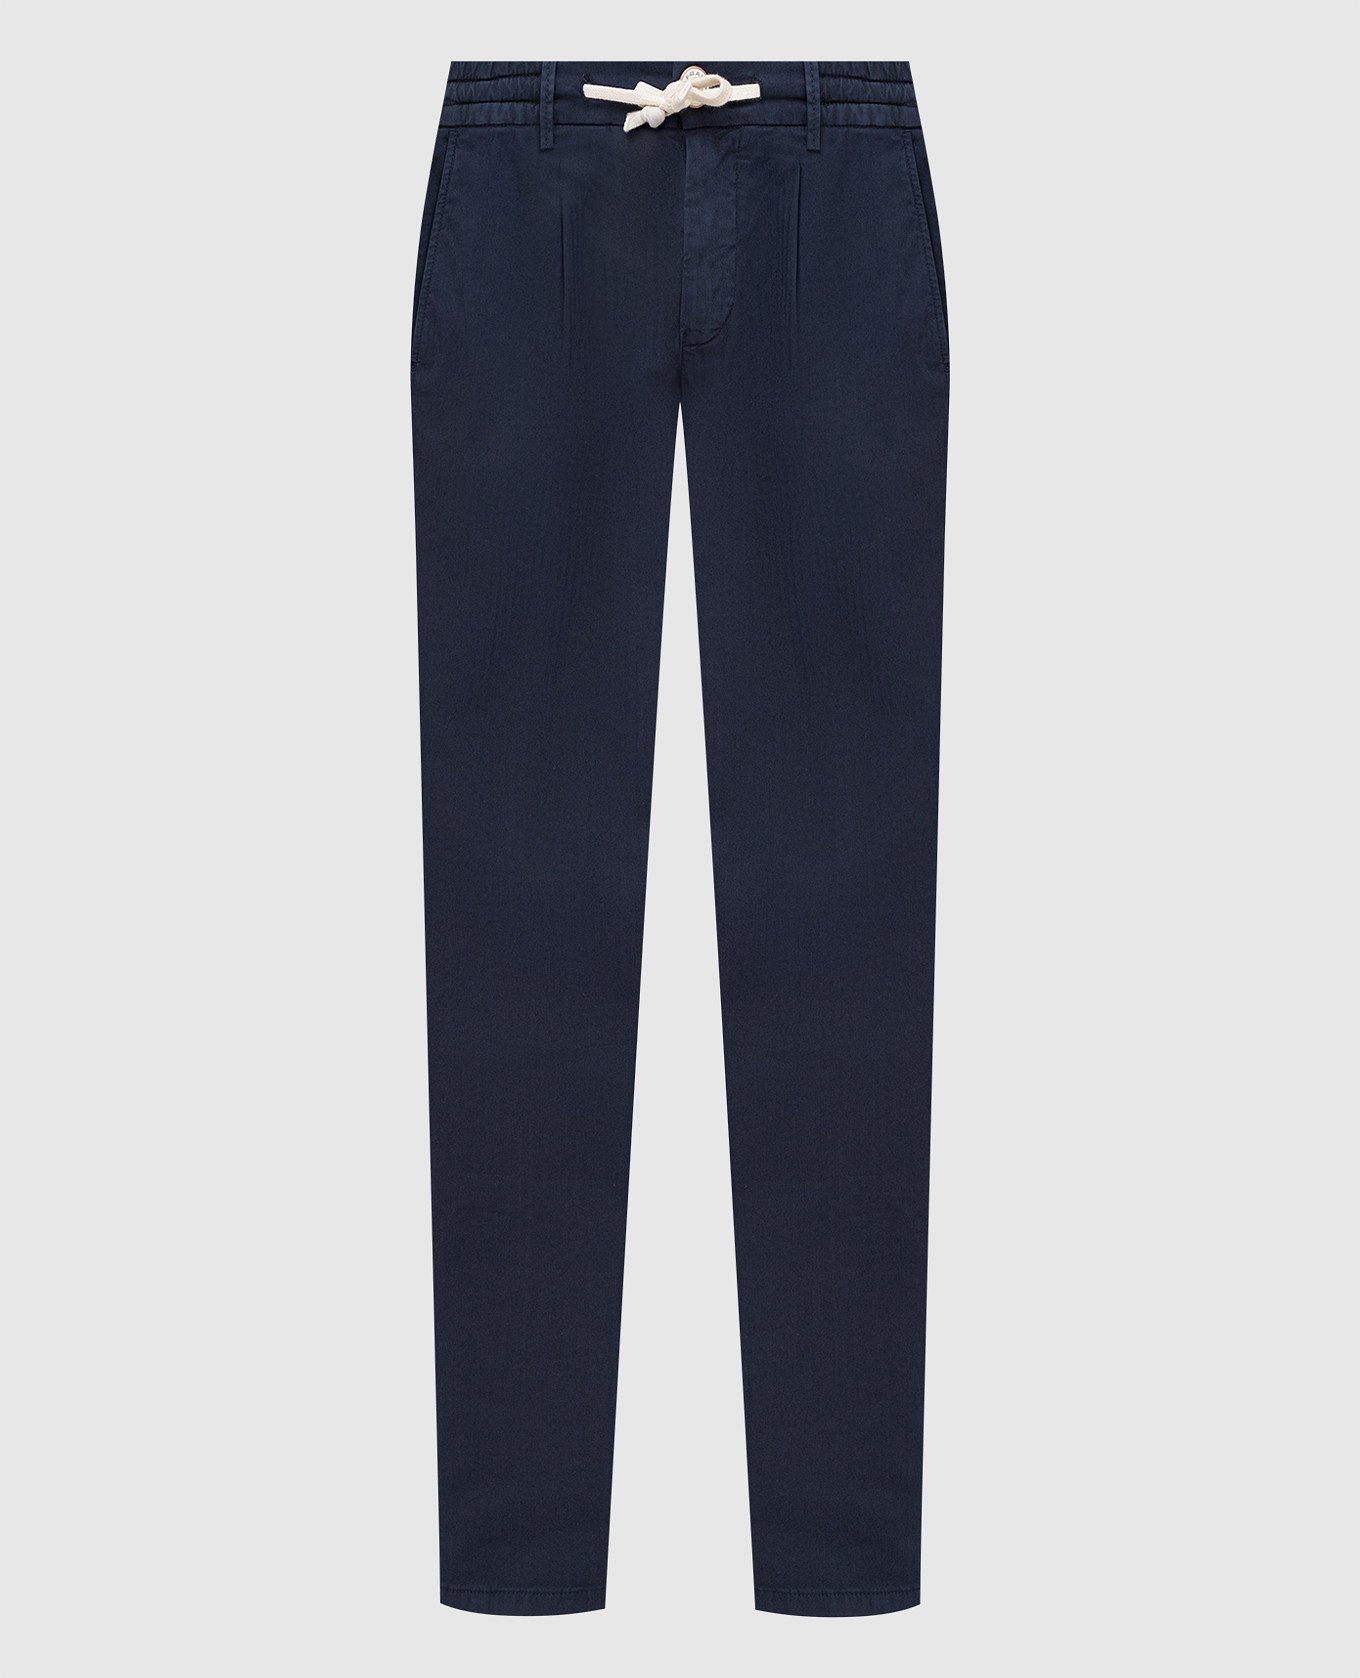 Navy blue drawstring trousers